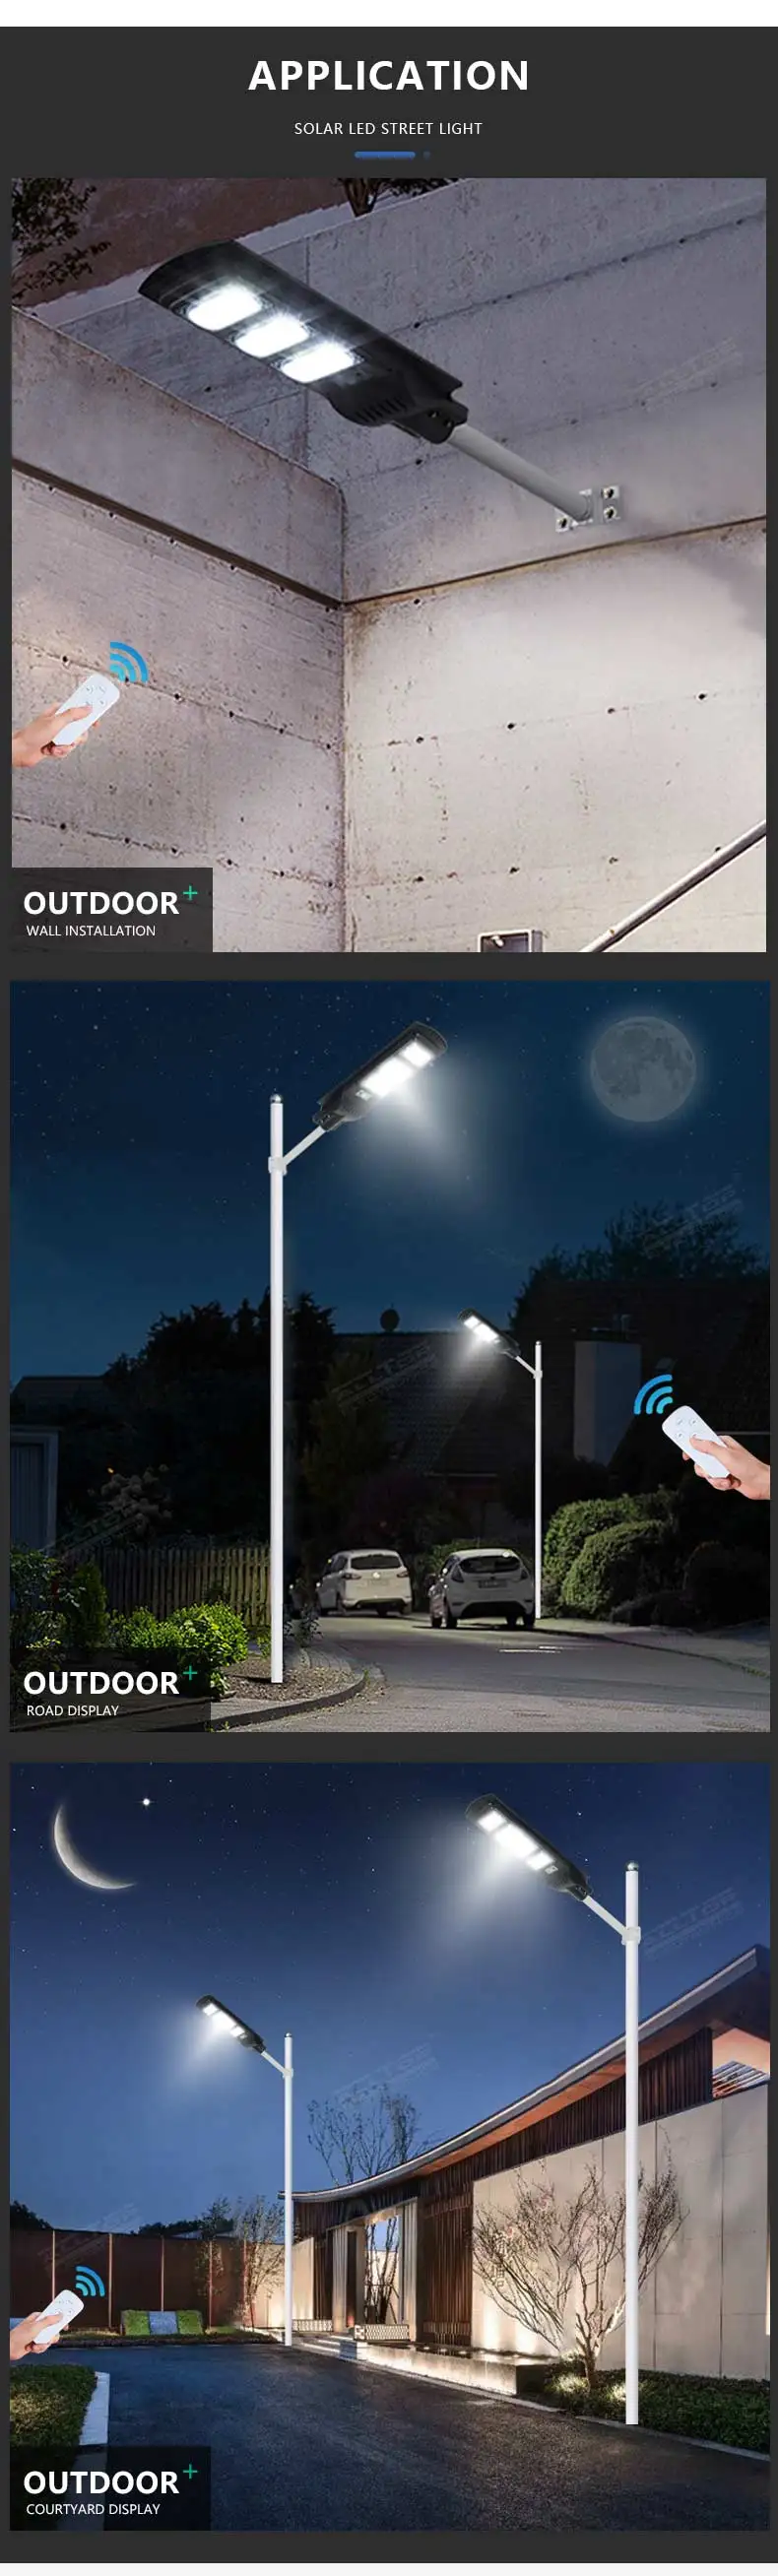 ALLTOP Waterproof outdoor ip65 motion sensor 30w 60w 90w integrated all in one led solar street light